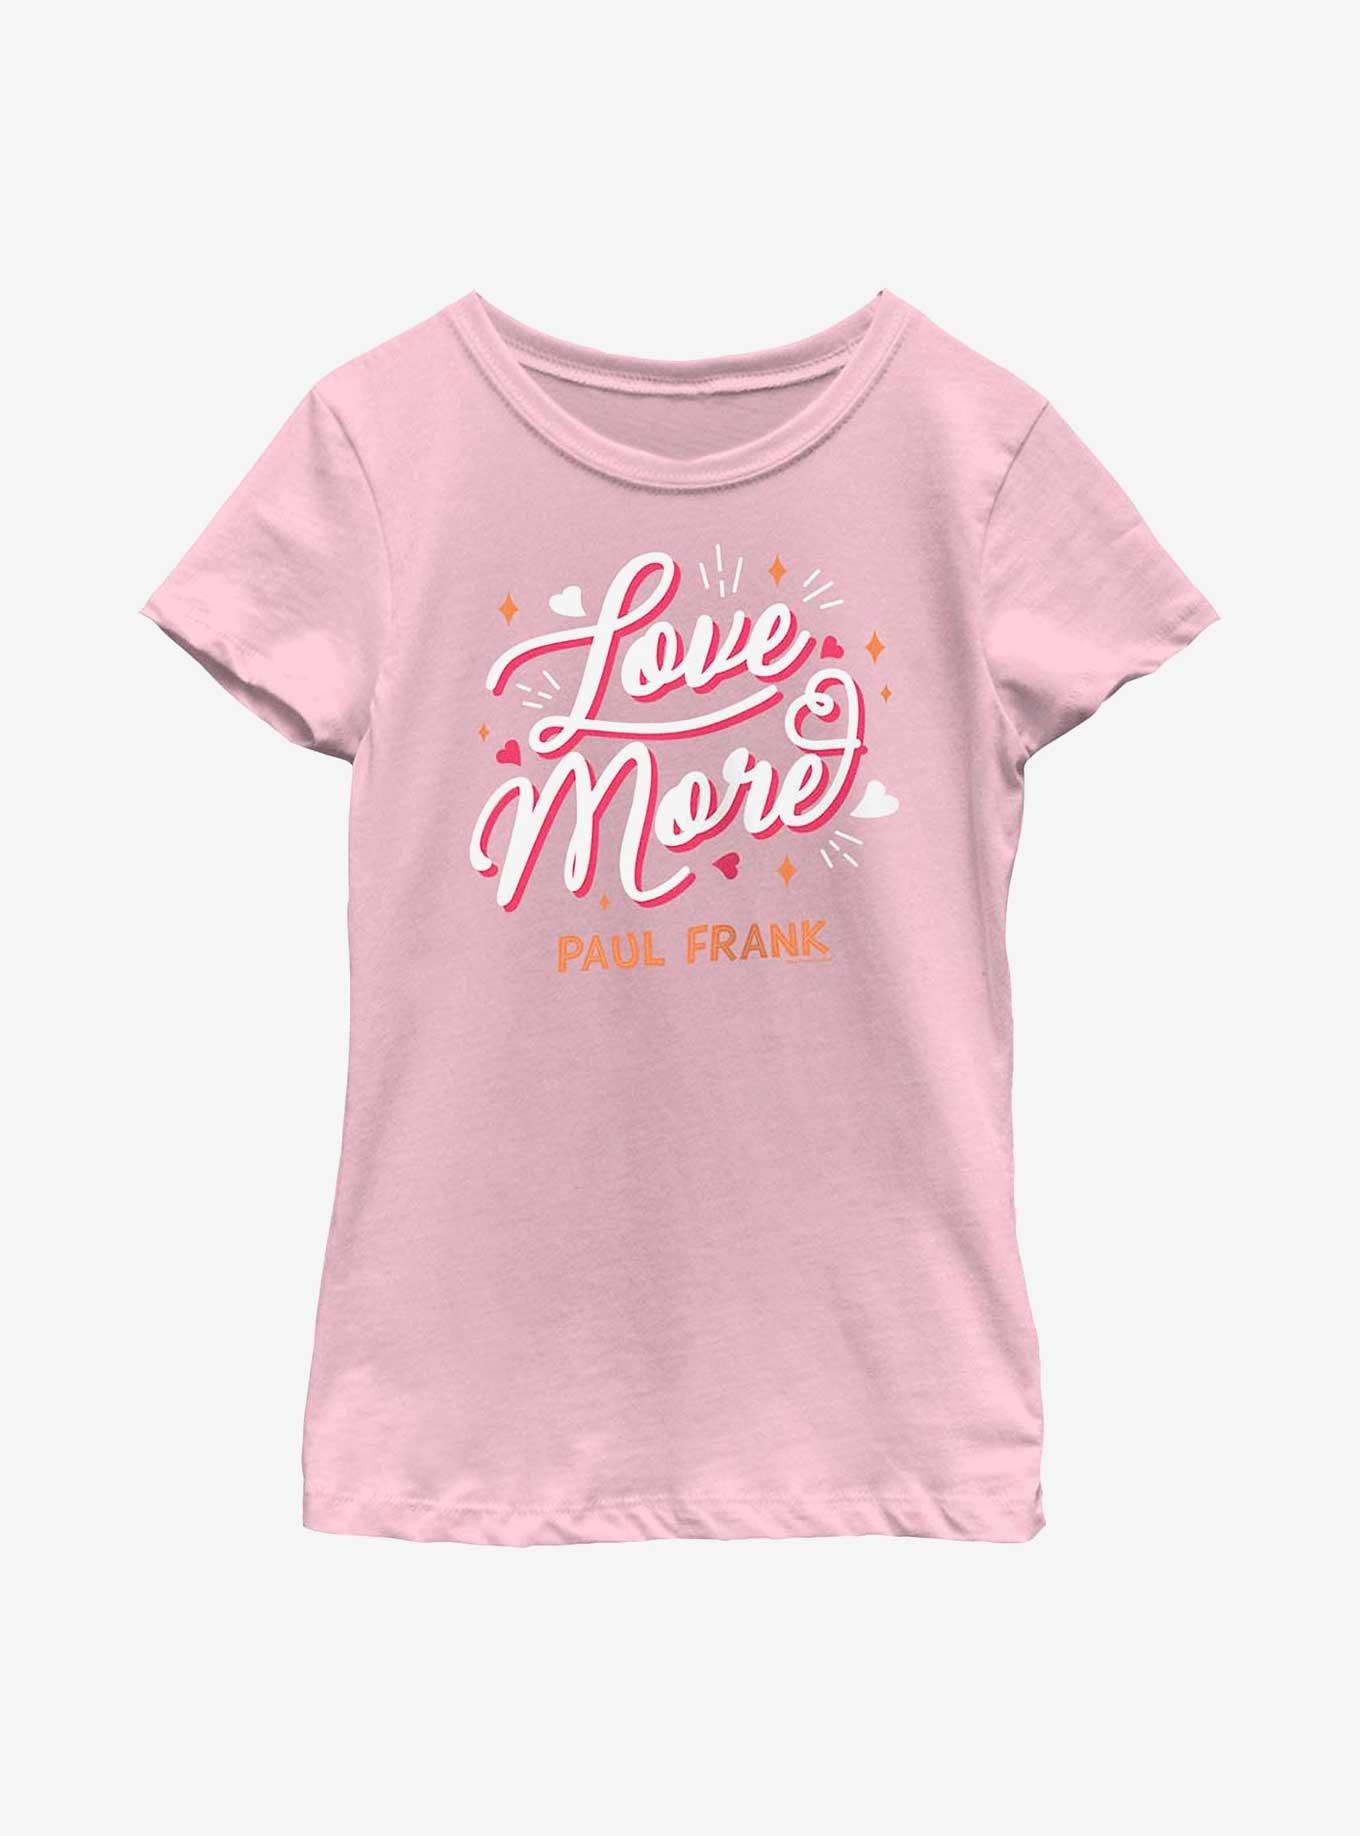 Paul Frank Love More Youth Girls T-Shirt, PINK, hi-res